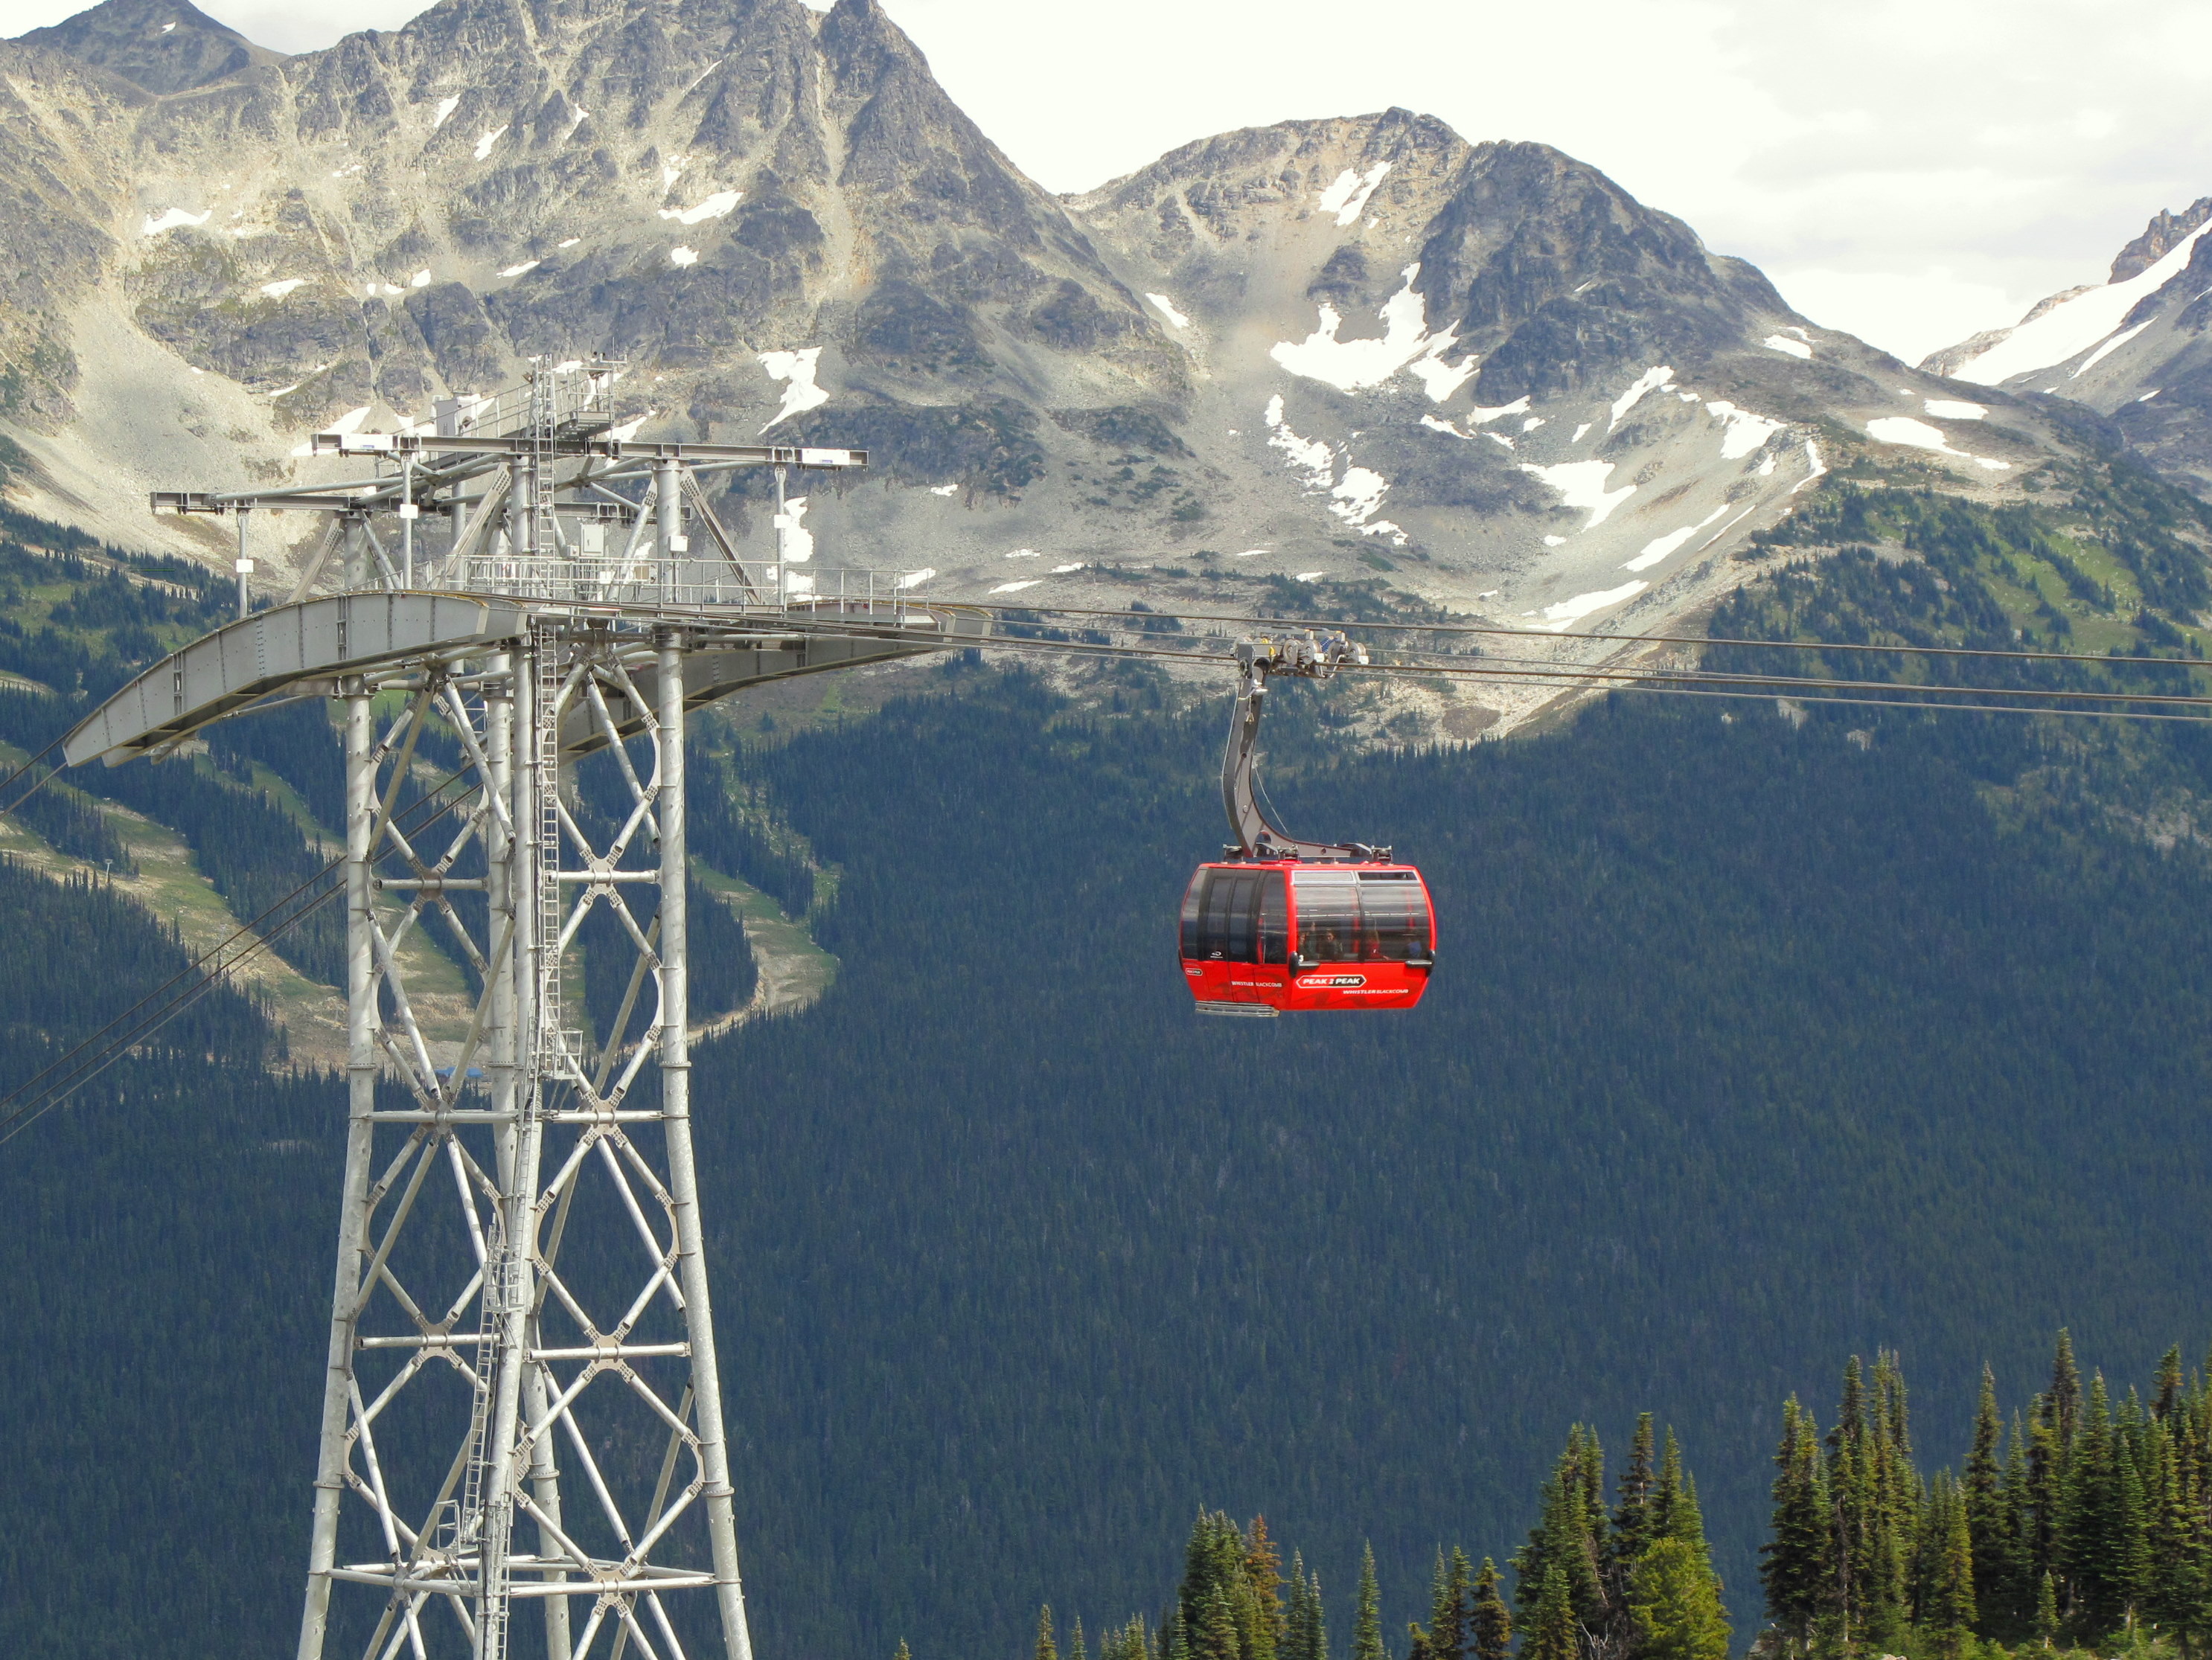 Whistler's World Record Breaking Peak 2 Peak Gondola